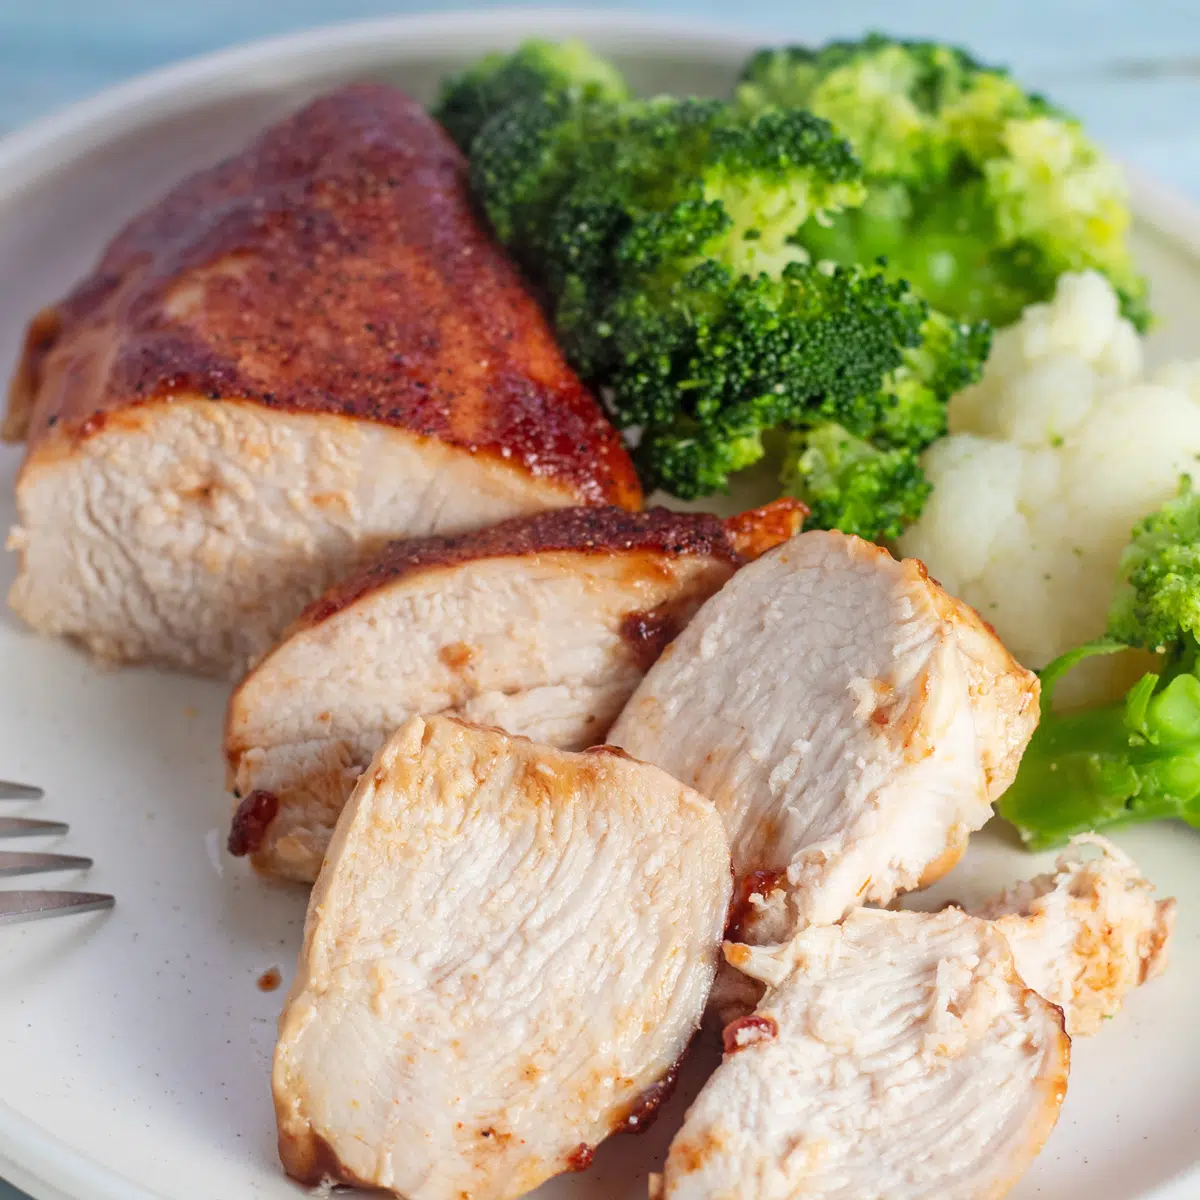 Dilimlenmiş pişmiş barbekü tavuk göğsü, buharda pişmiş brokoli ile servis edilir.